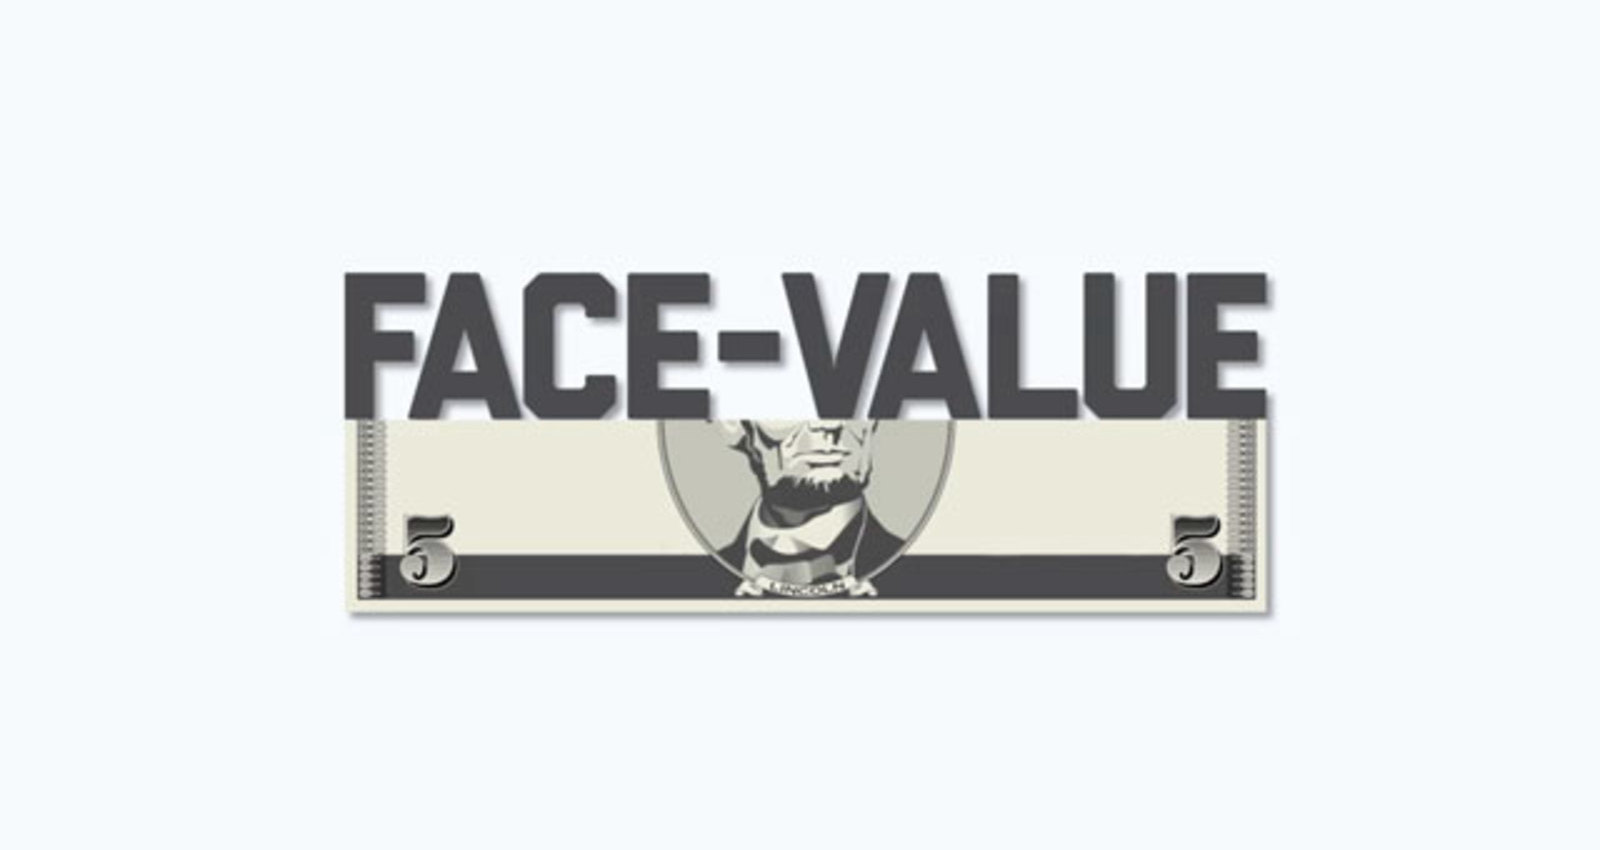 Face-Value Microsite